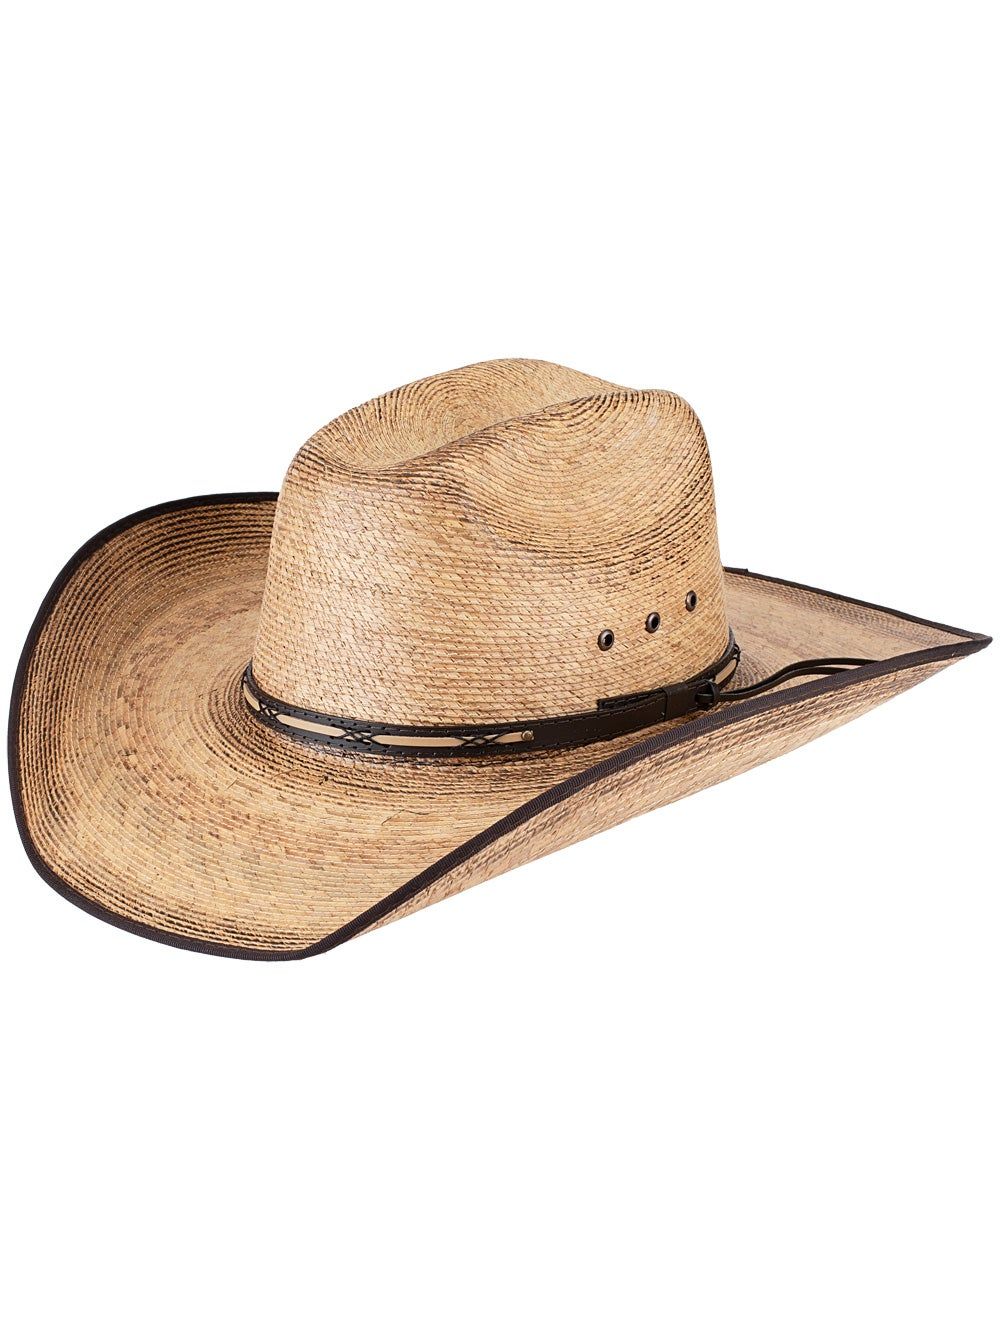 Resistol Amarillo Sky Jason Aldean Palm Cowboy Hat  RSMASKB3041